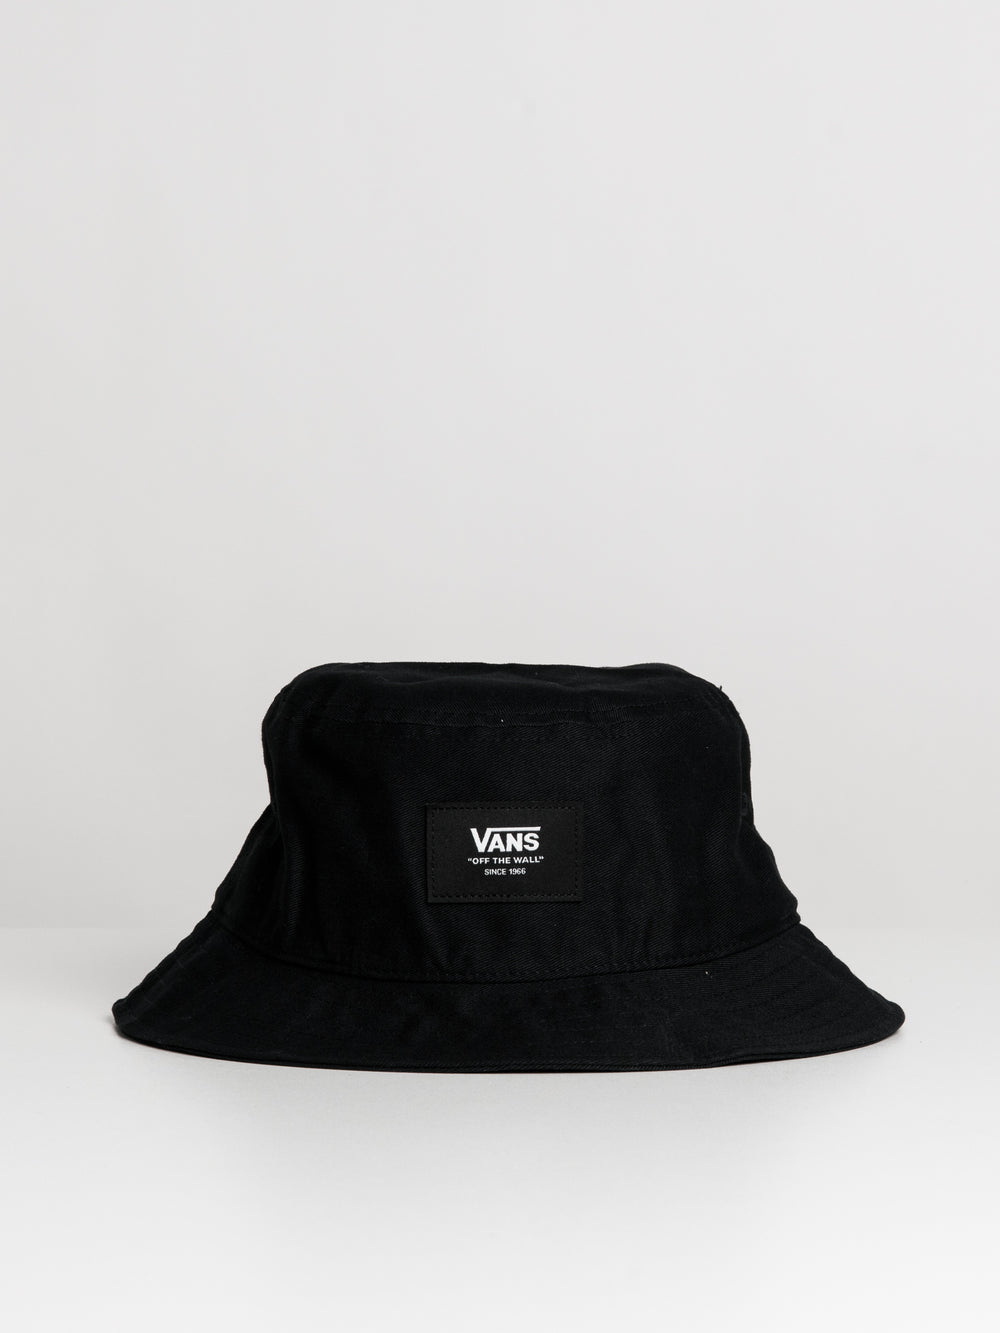 VANS PATCH BUCKET HAT - BLACK - CLEARANCE